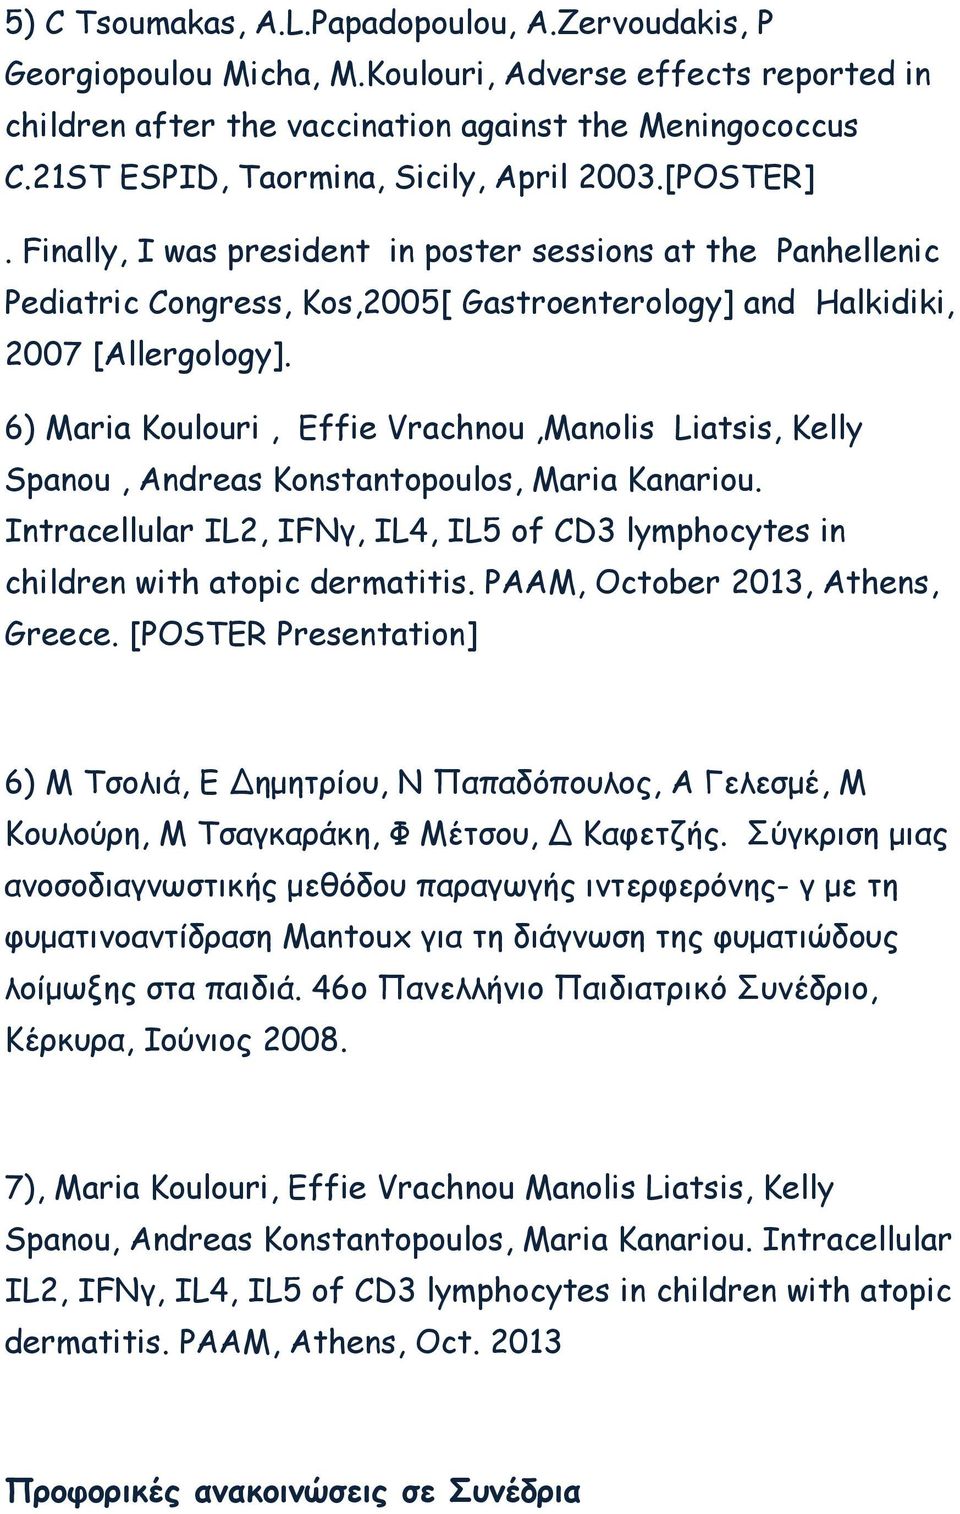 6) Maria Koulouri, Effie Vrachnou,Manolis Liatsis, Kelly Spanou, Andreas Konstantopoulos, Maria Kanariou. Intracellular IL2, IFNγ, IL4, IL5 of CD3 lymphocytes in children with atopic dermatitis.